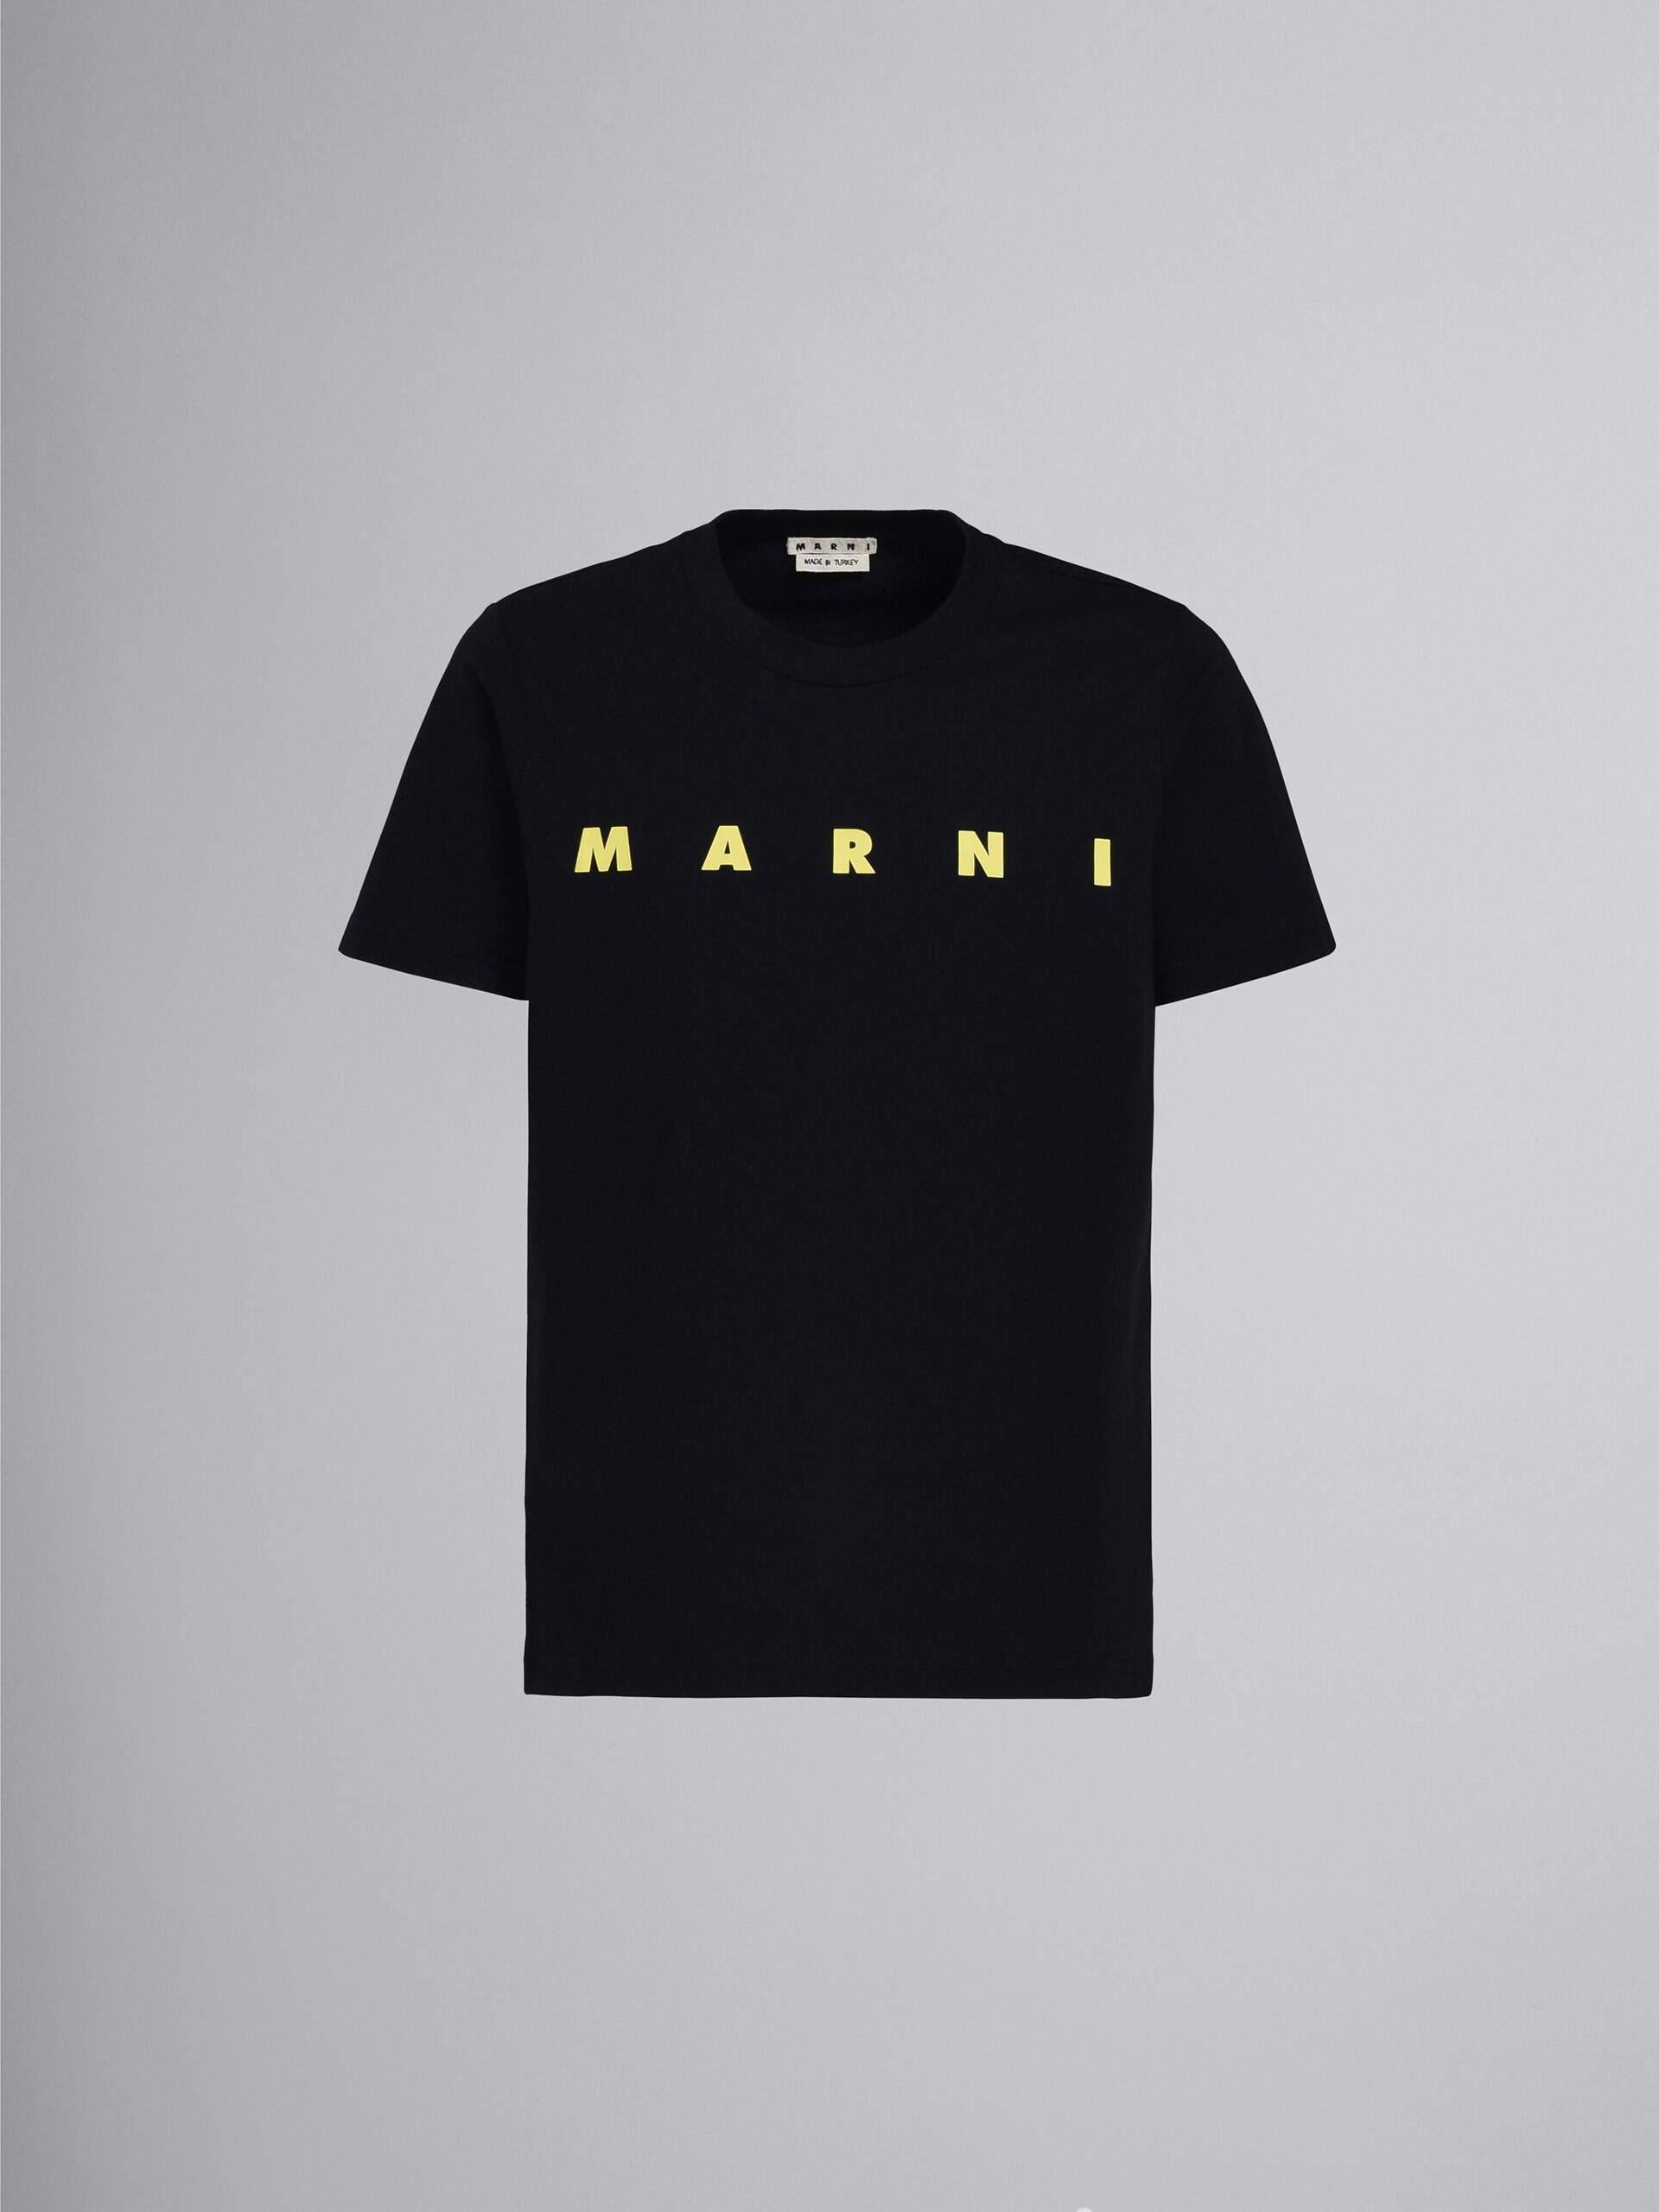 Black logo print T-shirt - T-shirts - Image 1